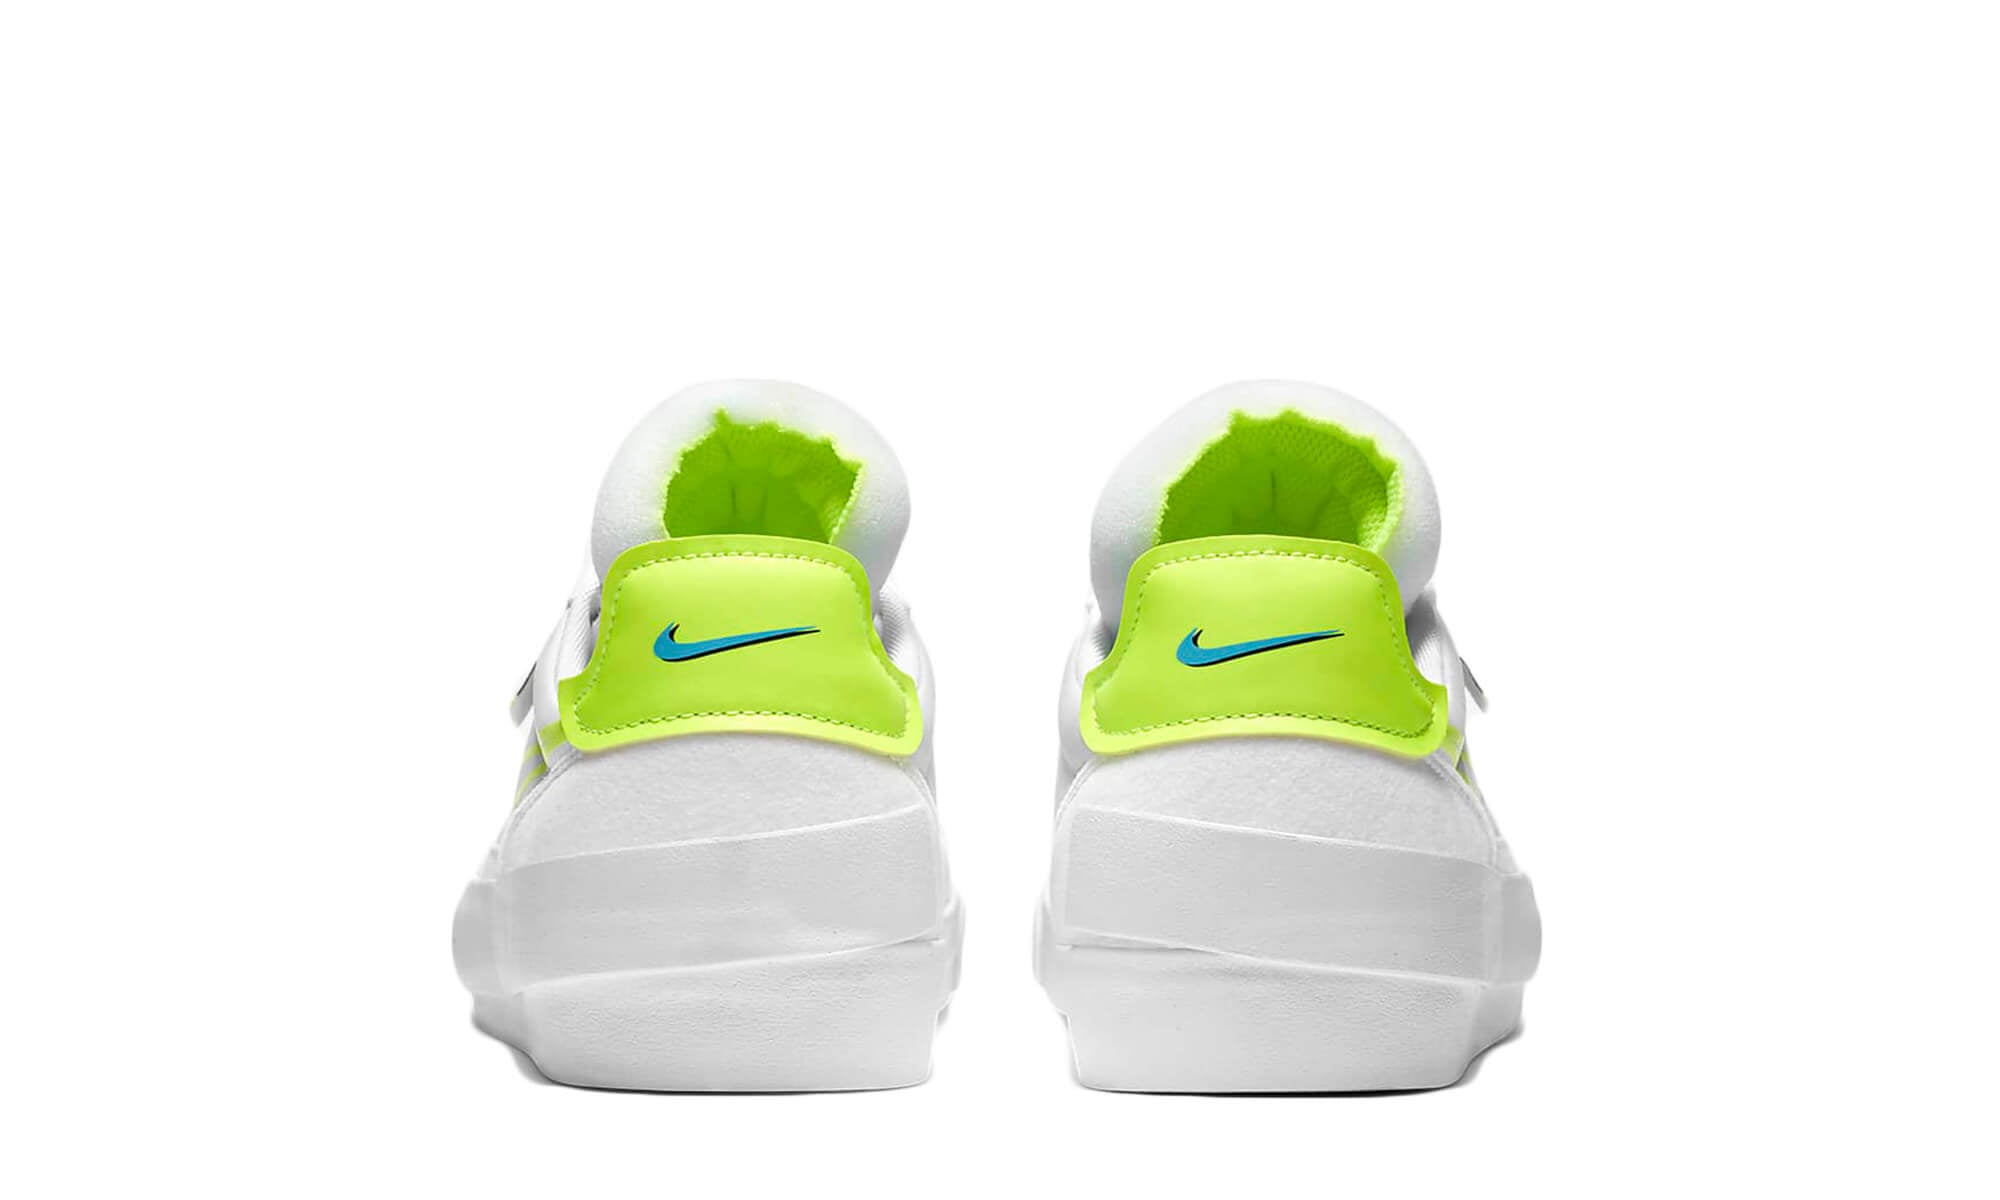 Nike Drop-Type HBR Worldwide 'White/Volt'